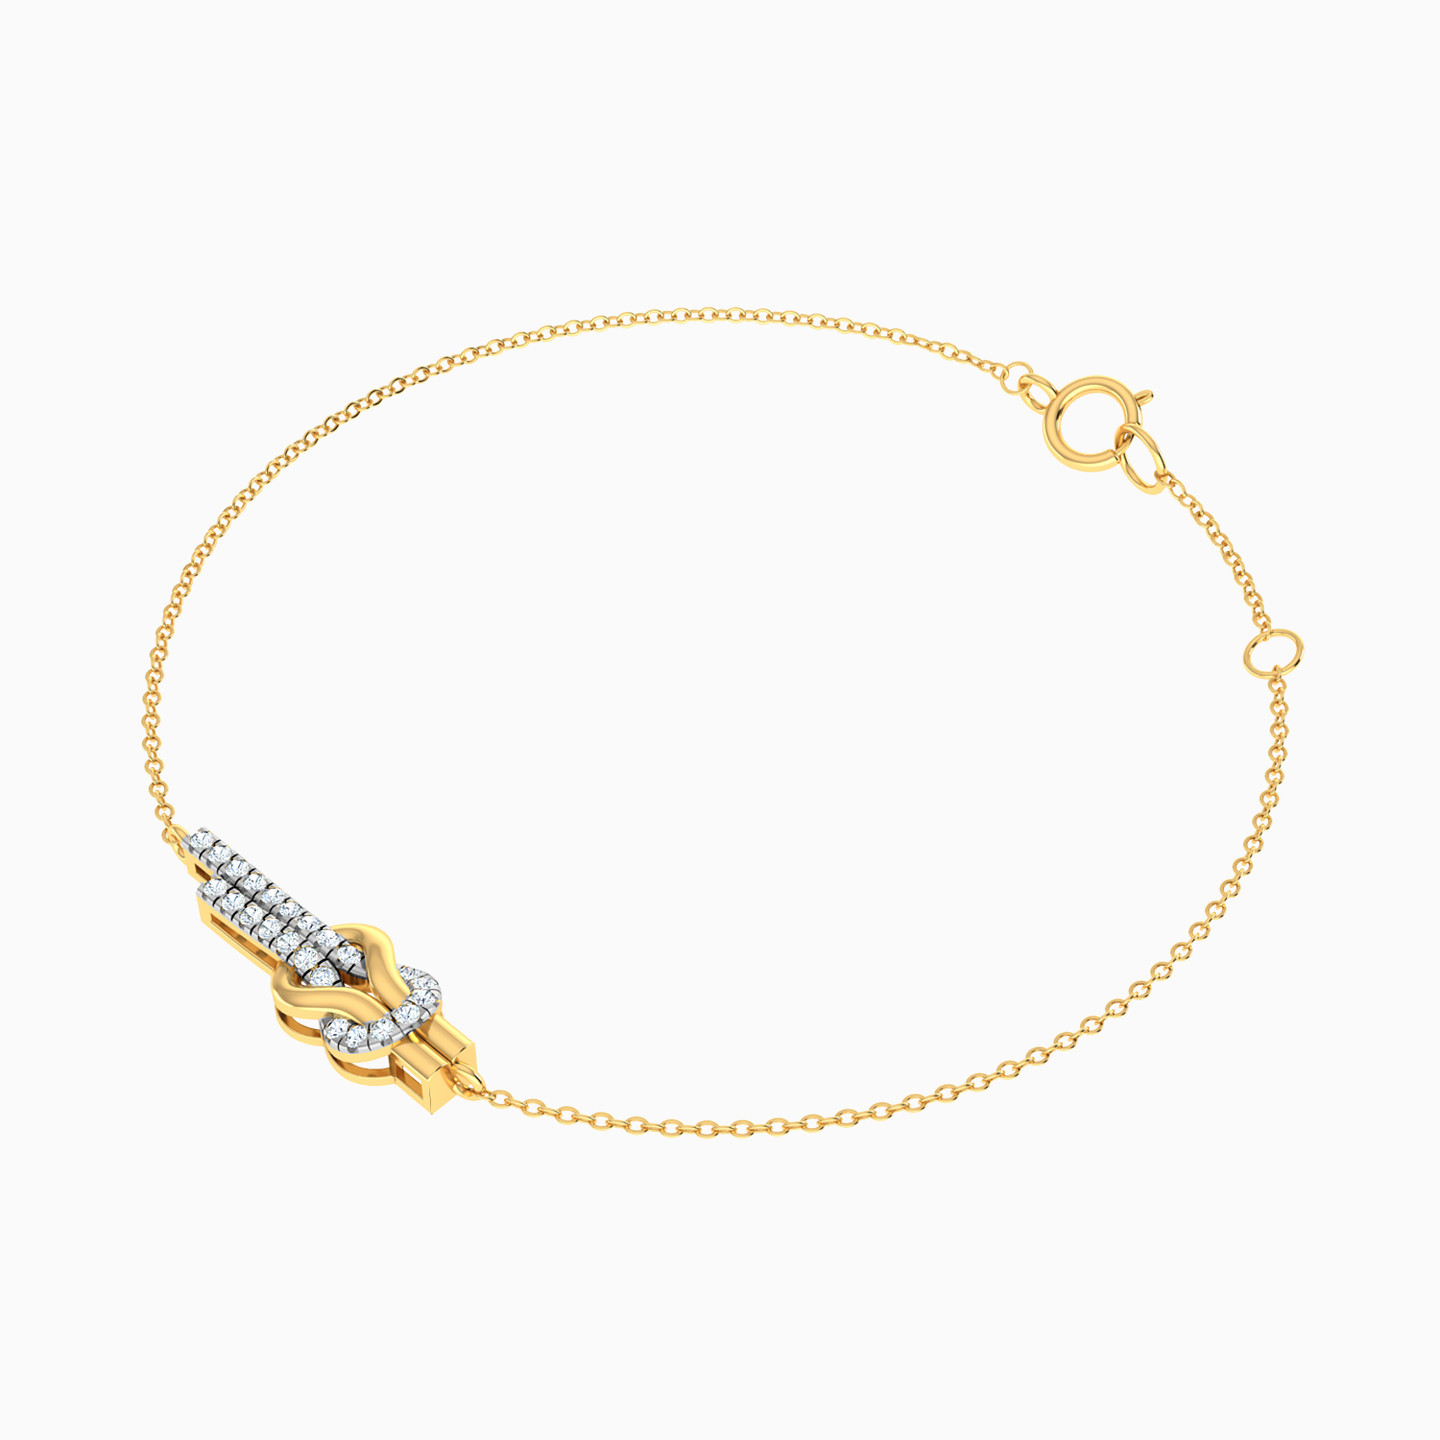 Knot Shaped Diamond Chain Bracelet in 18K Gold - 2